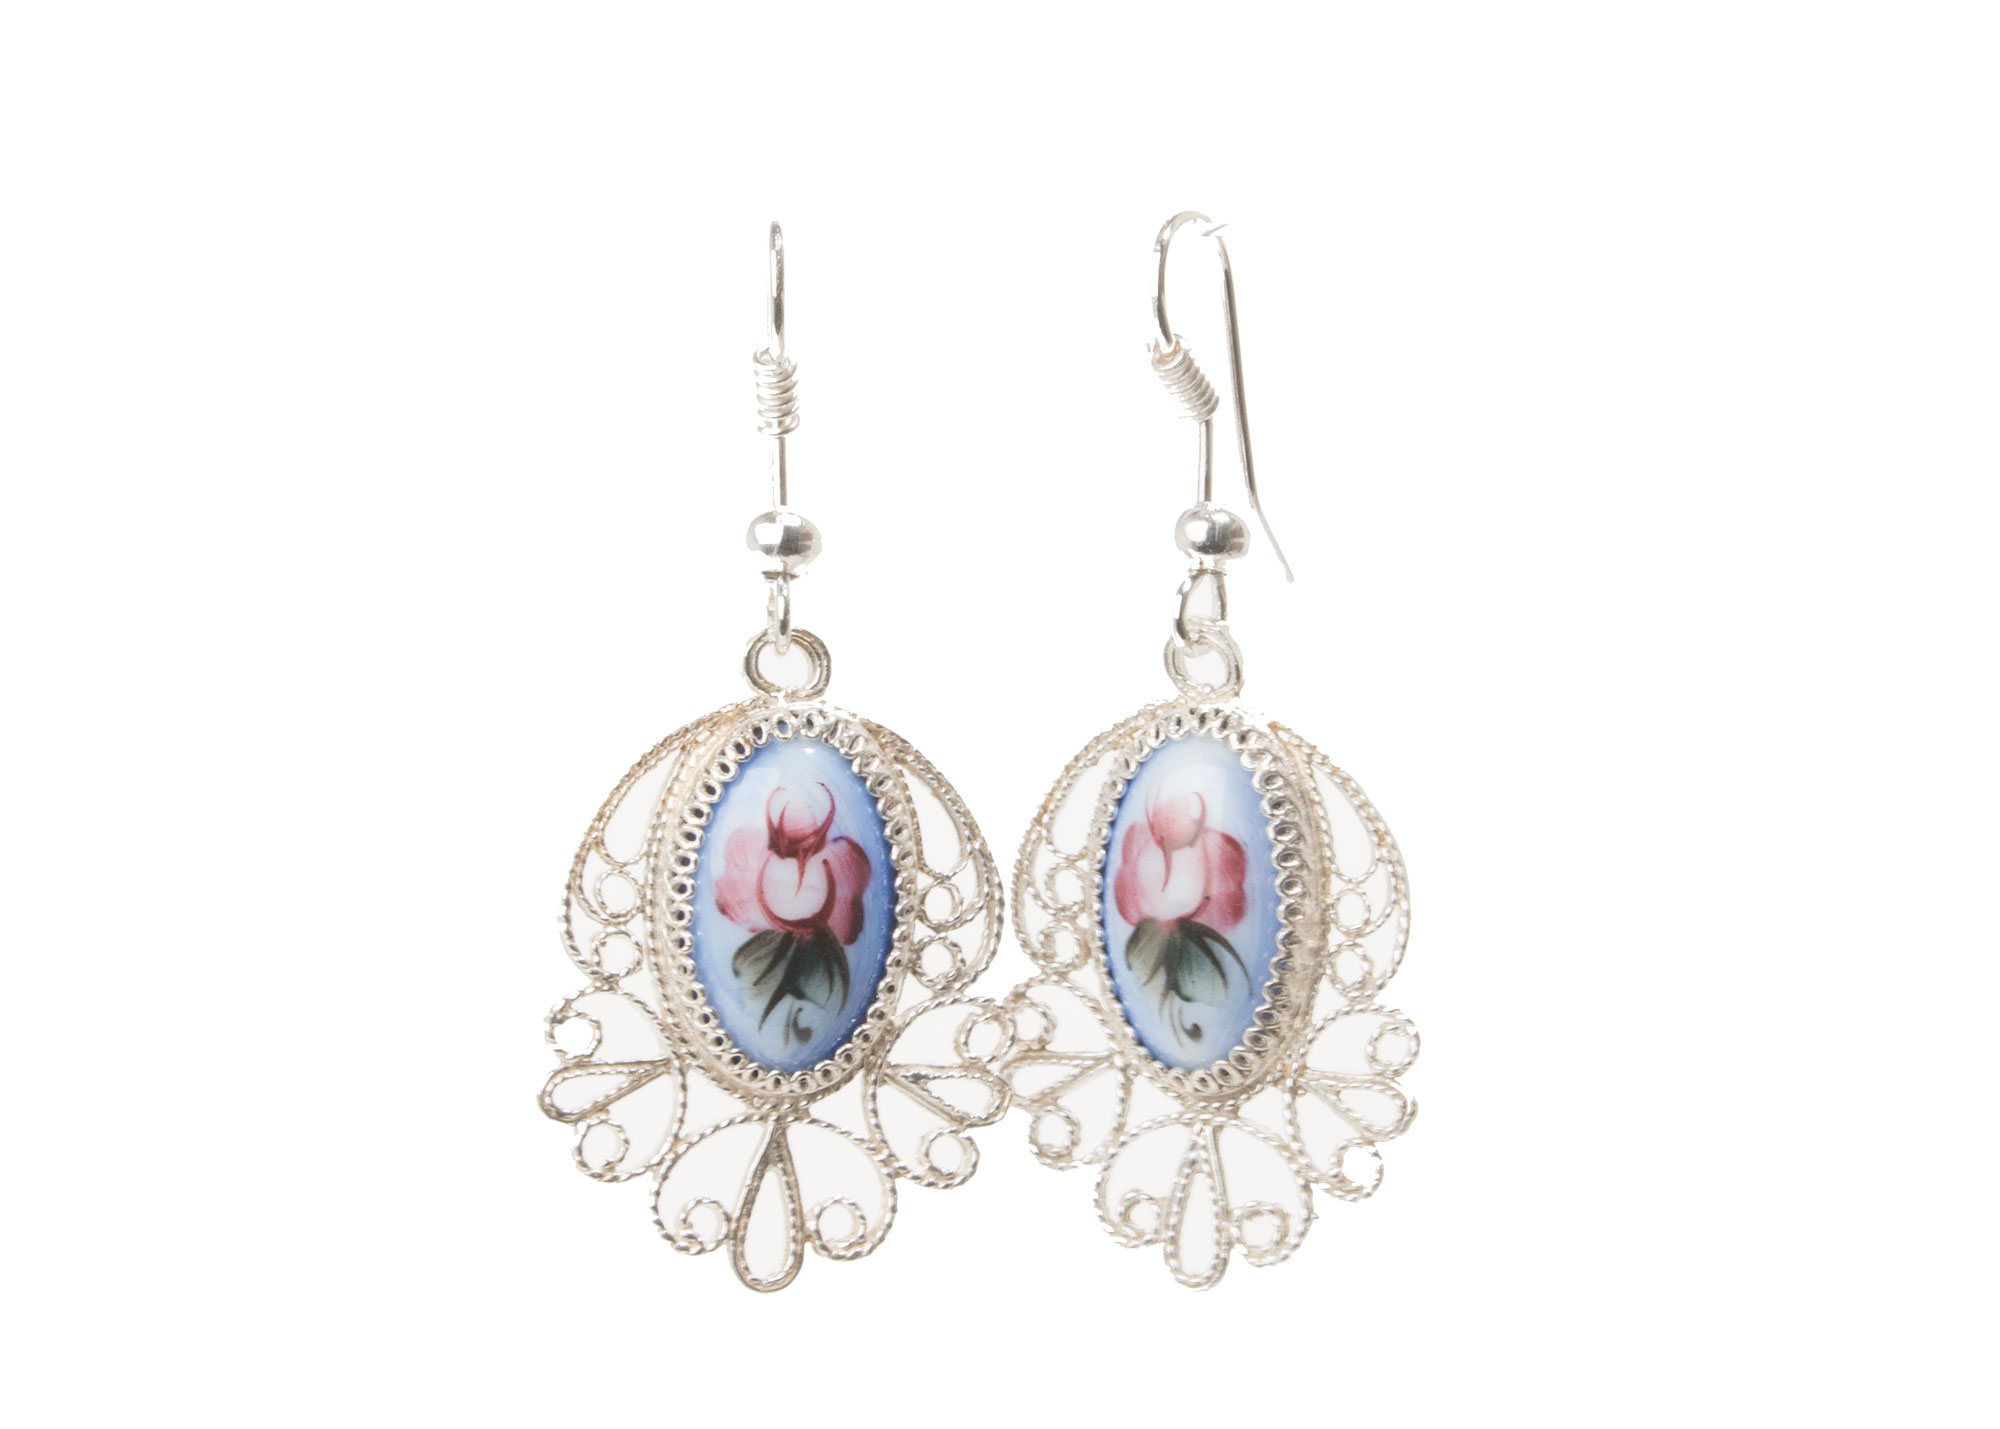 Buy Finift Blue Princess Earrings at GoldenCockerel.com